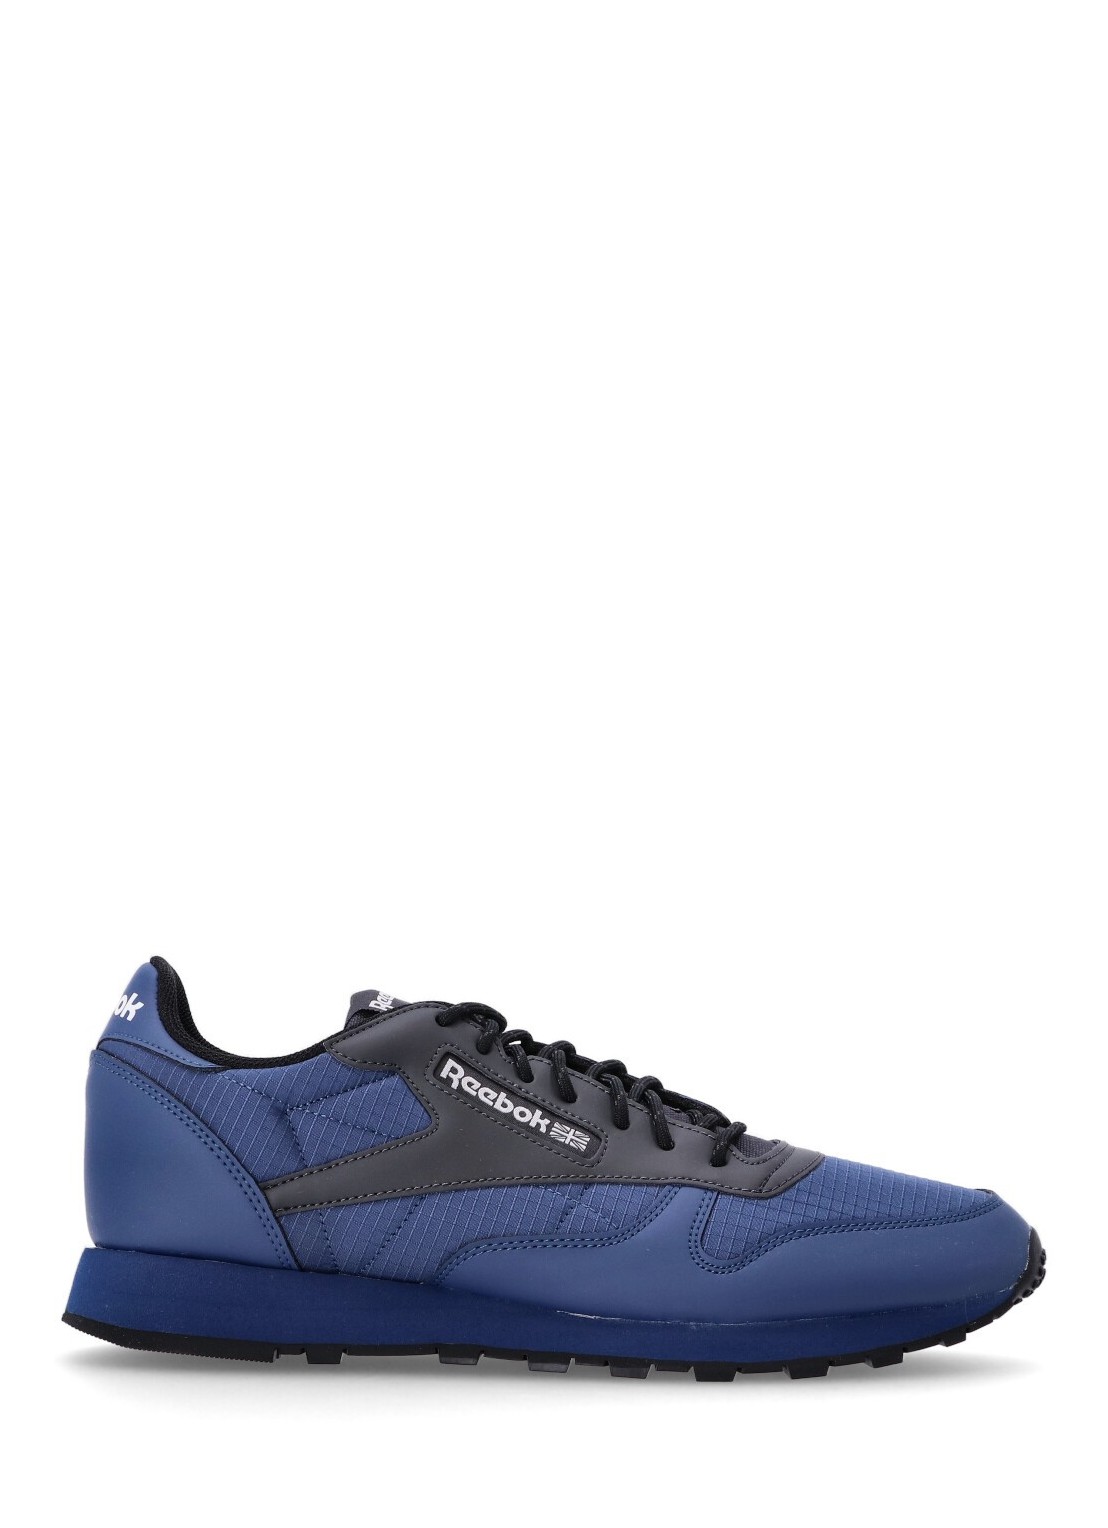 Sneaker reebok sneaker man classic leather ig2642 batik blue cold grey talla 44
 